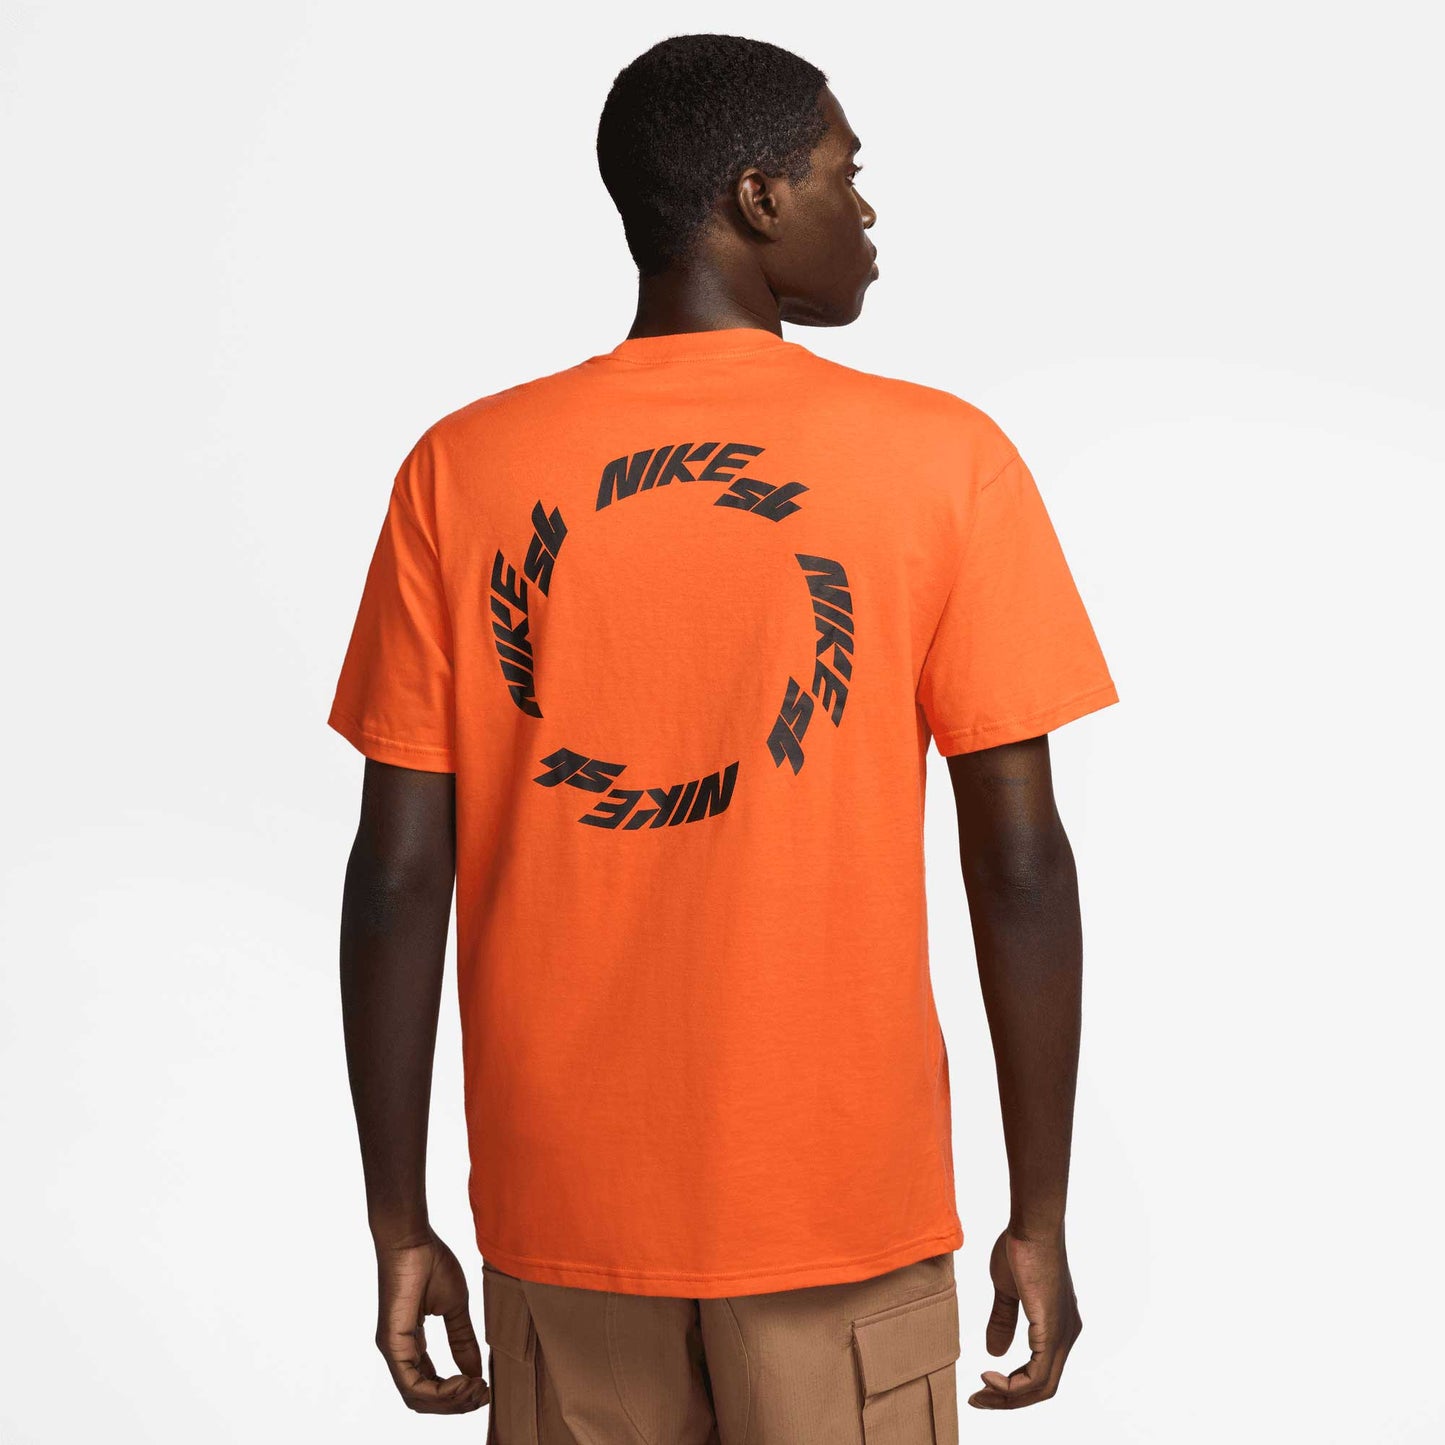 Nike SB Wheel T-Shirt, safety orange - Tiki Room Skateboards - 1